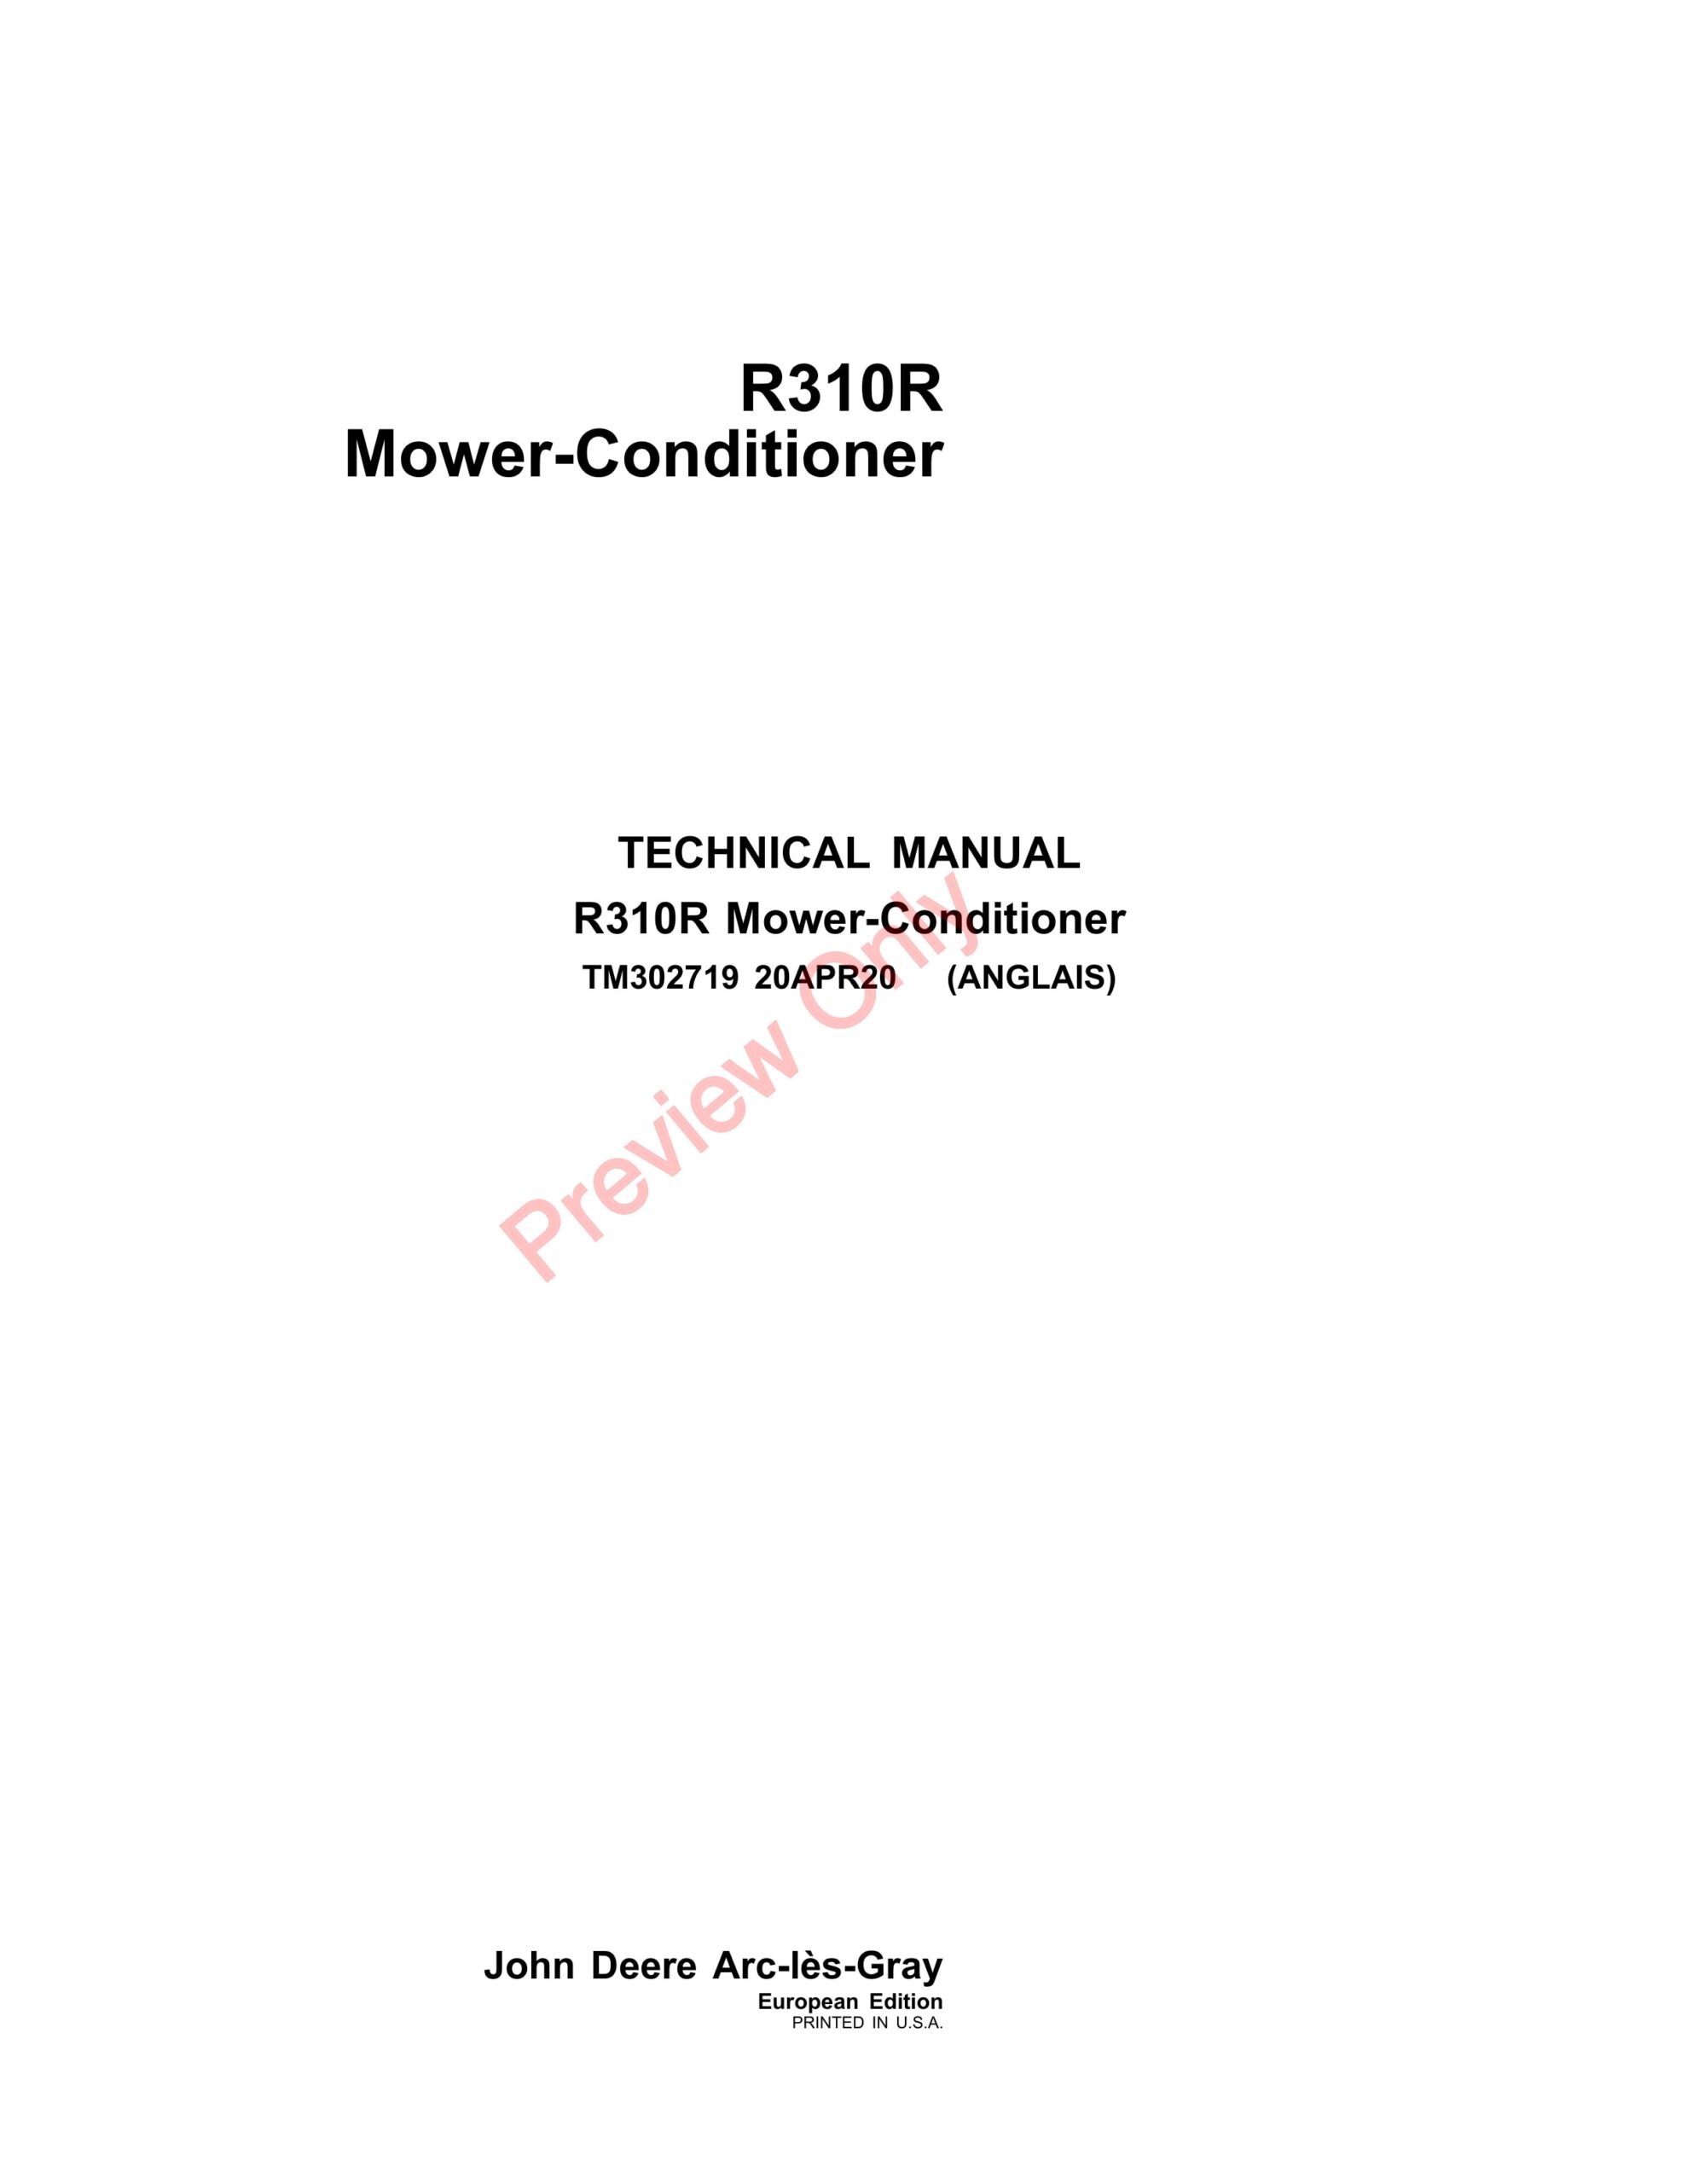 John Deere R310R Mower-Conditioner Technical Manual TM302719 20APR20-1